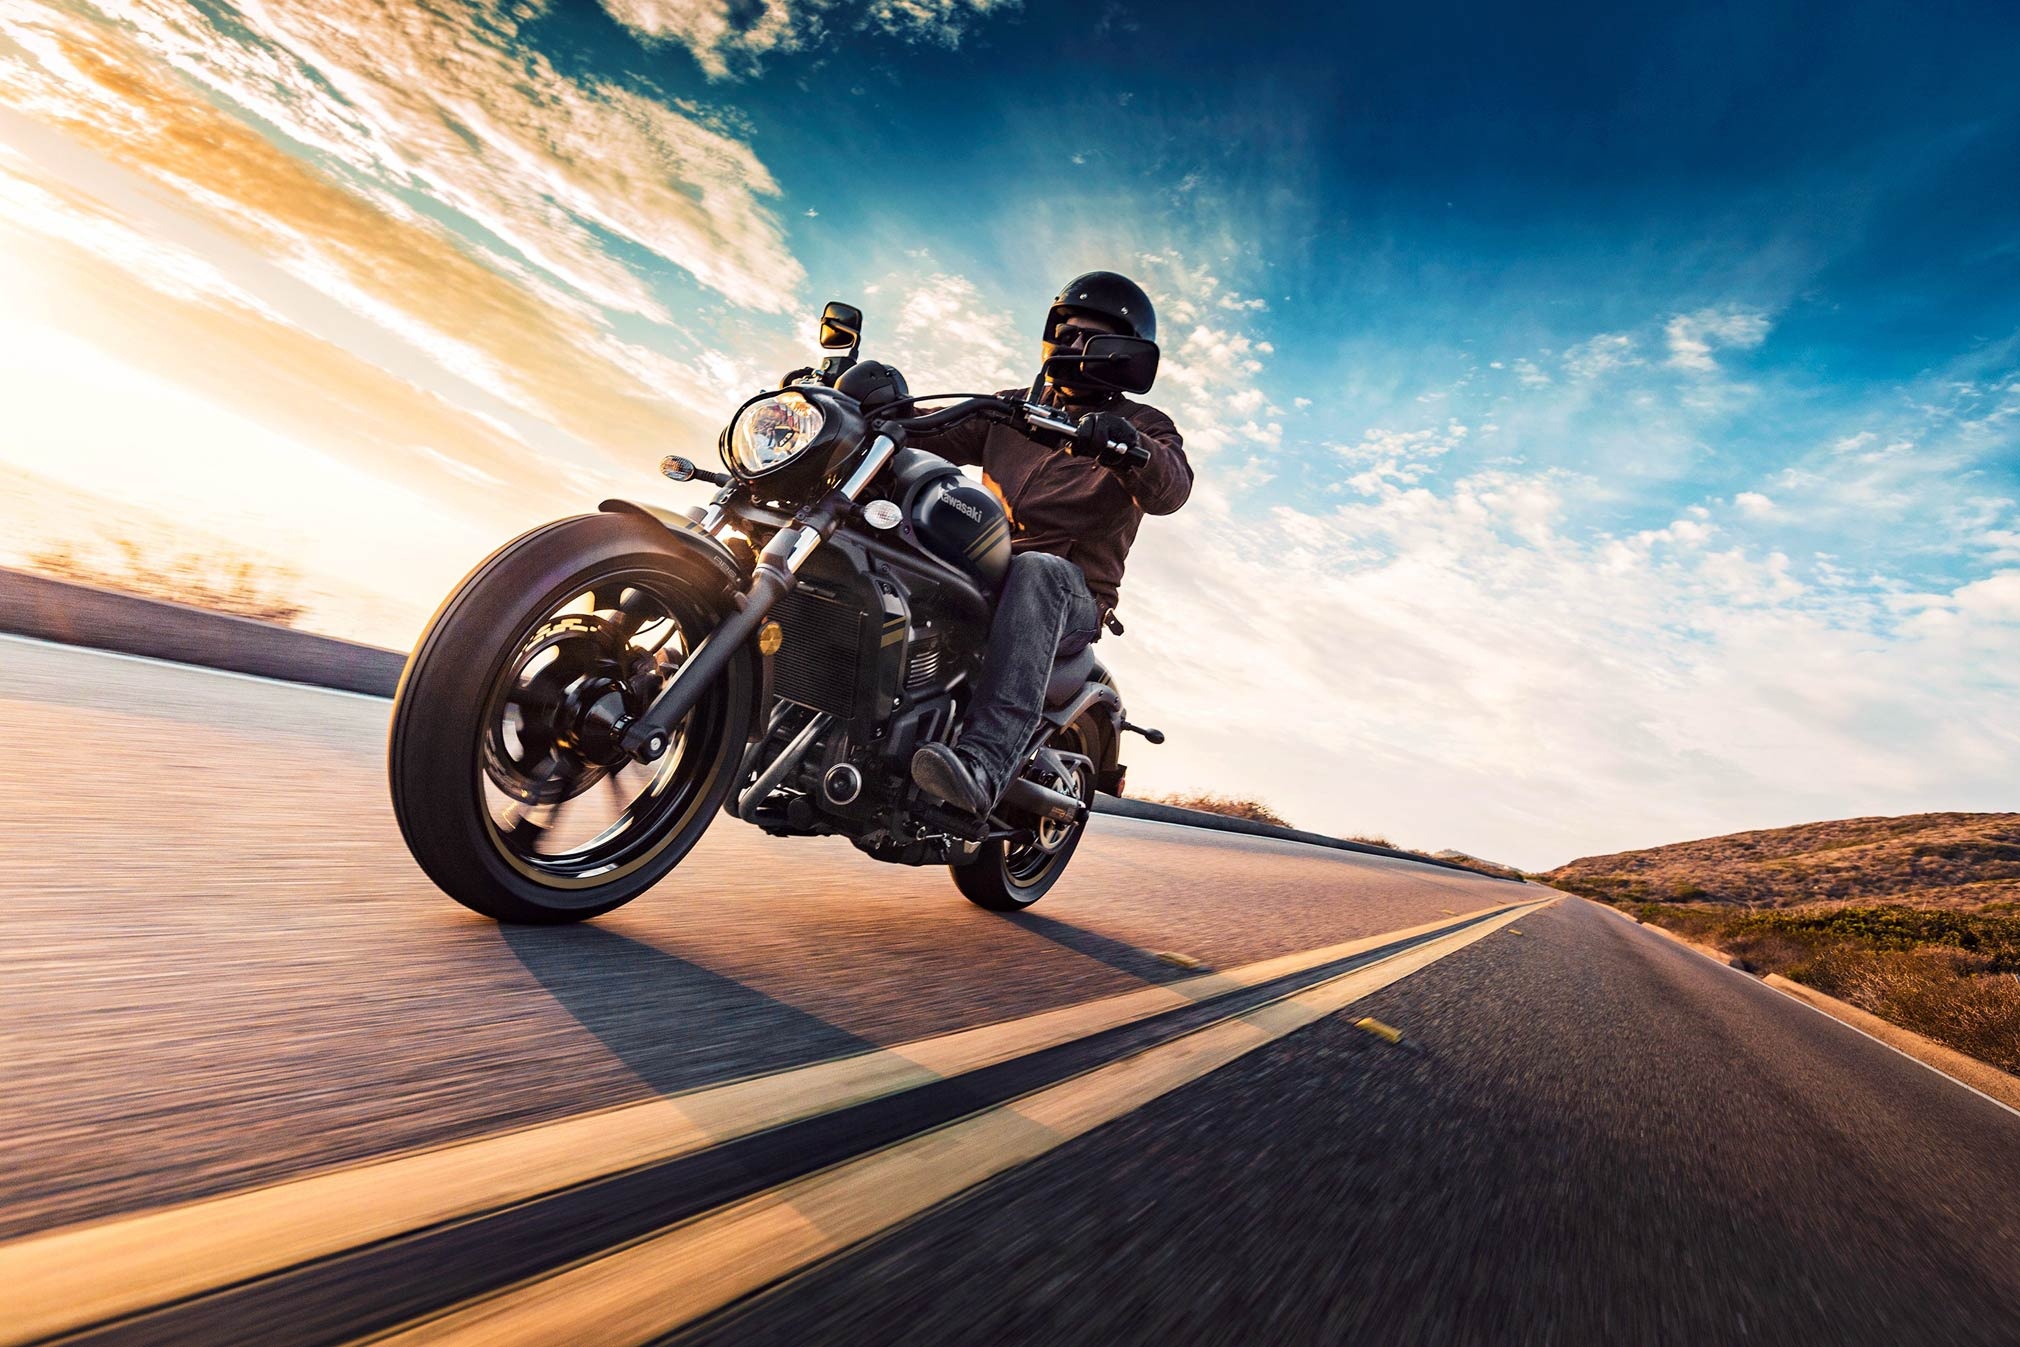 2020 Kawasaki Vulcan S, Total Motorcycle guide, Auto expert, Motorcycle review, 2020x1350 HD Desktop